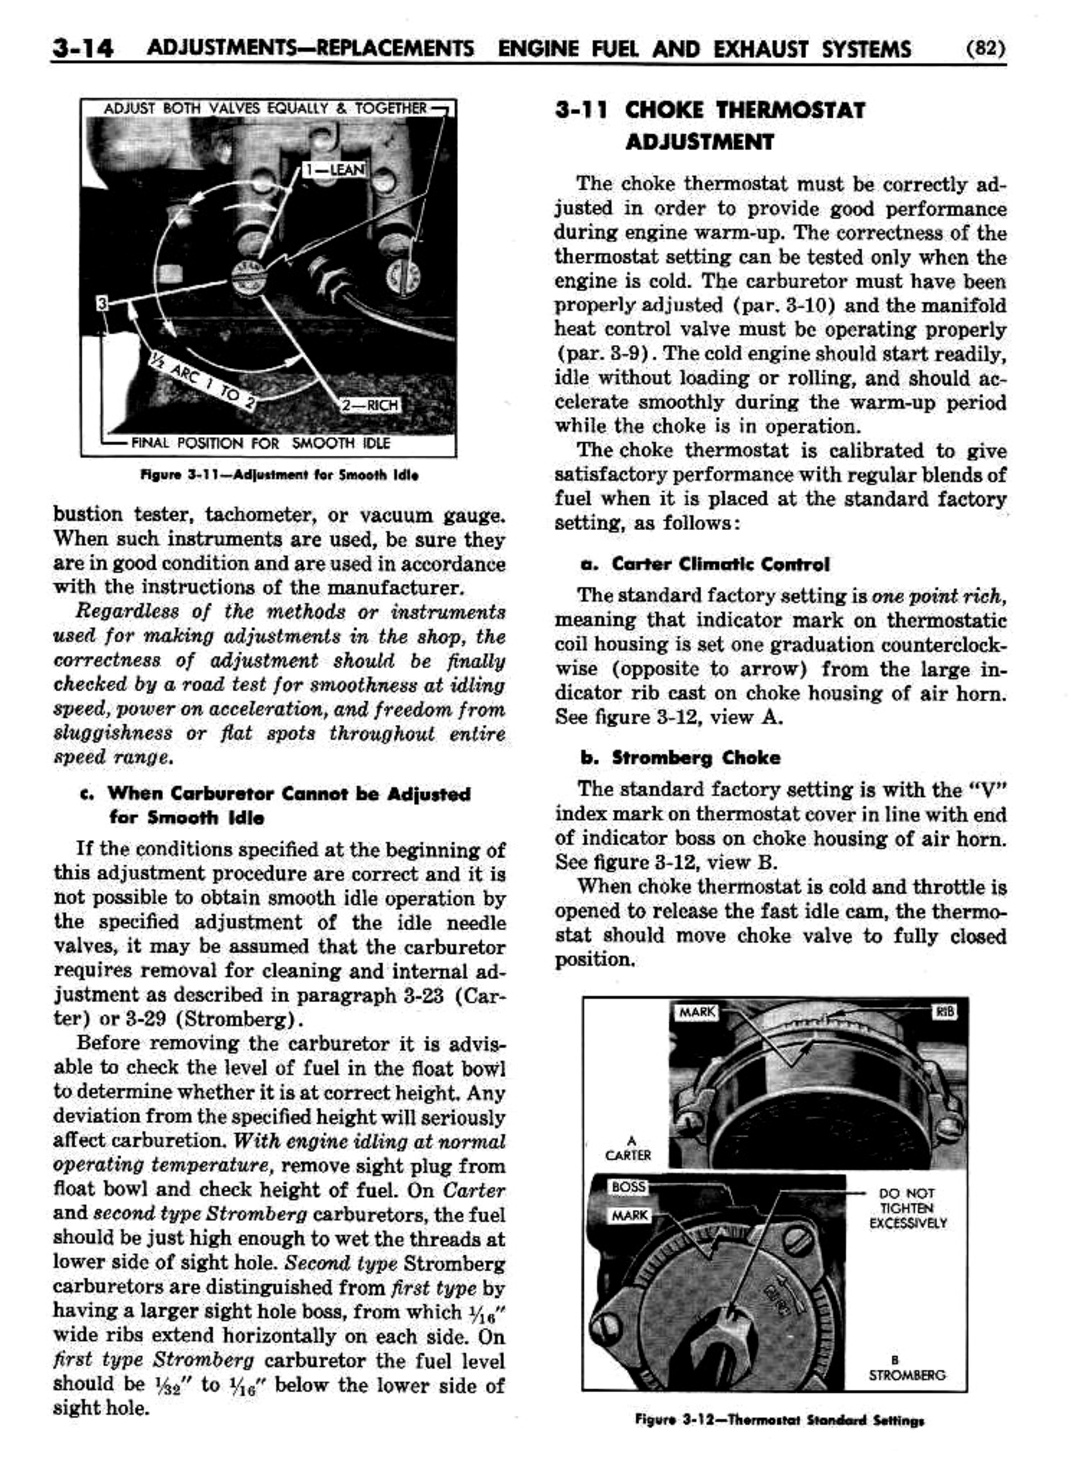 n_04 1951 Buick Shop Manual - Engine Fuel & Exhaust-014-014.jpg